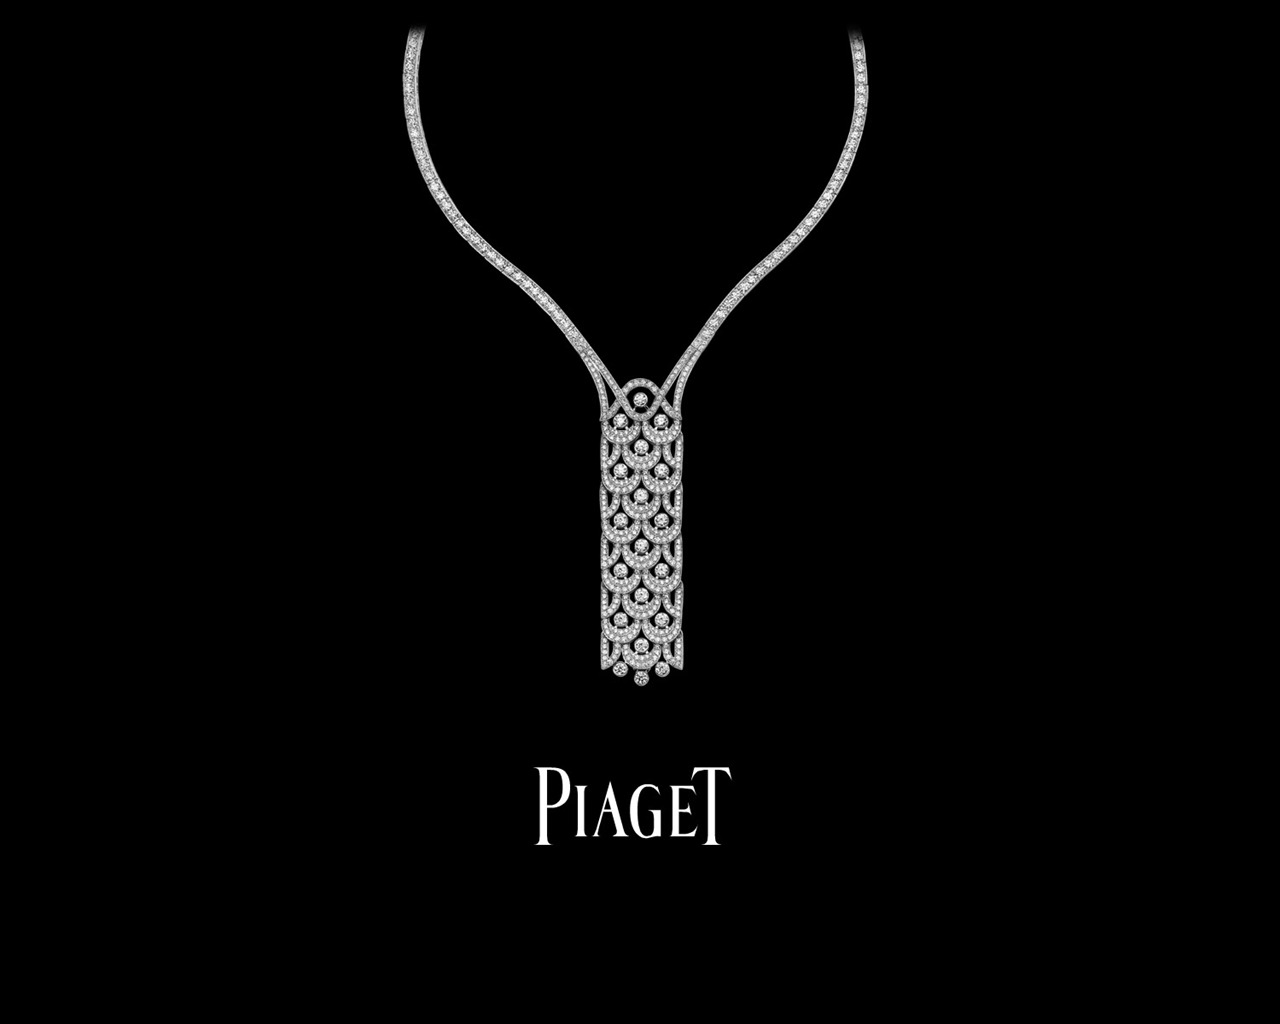 Piaget diamond jewelry wallpaper (3) #11 - 1280x1024